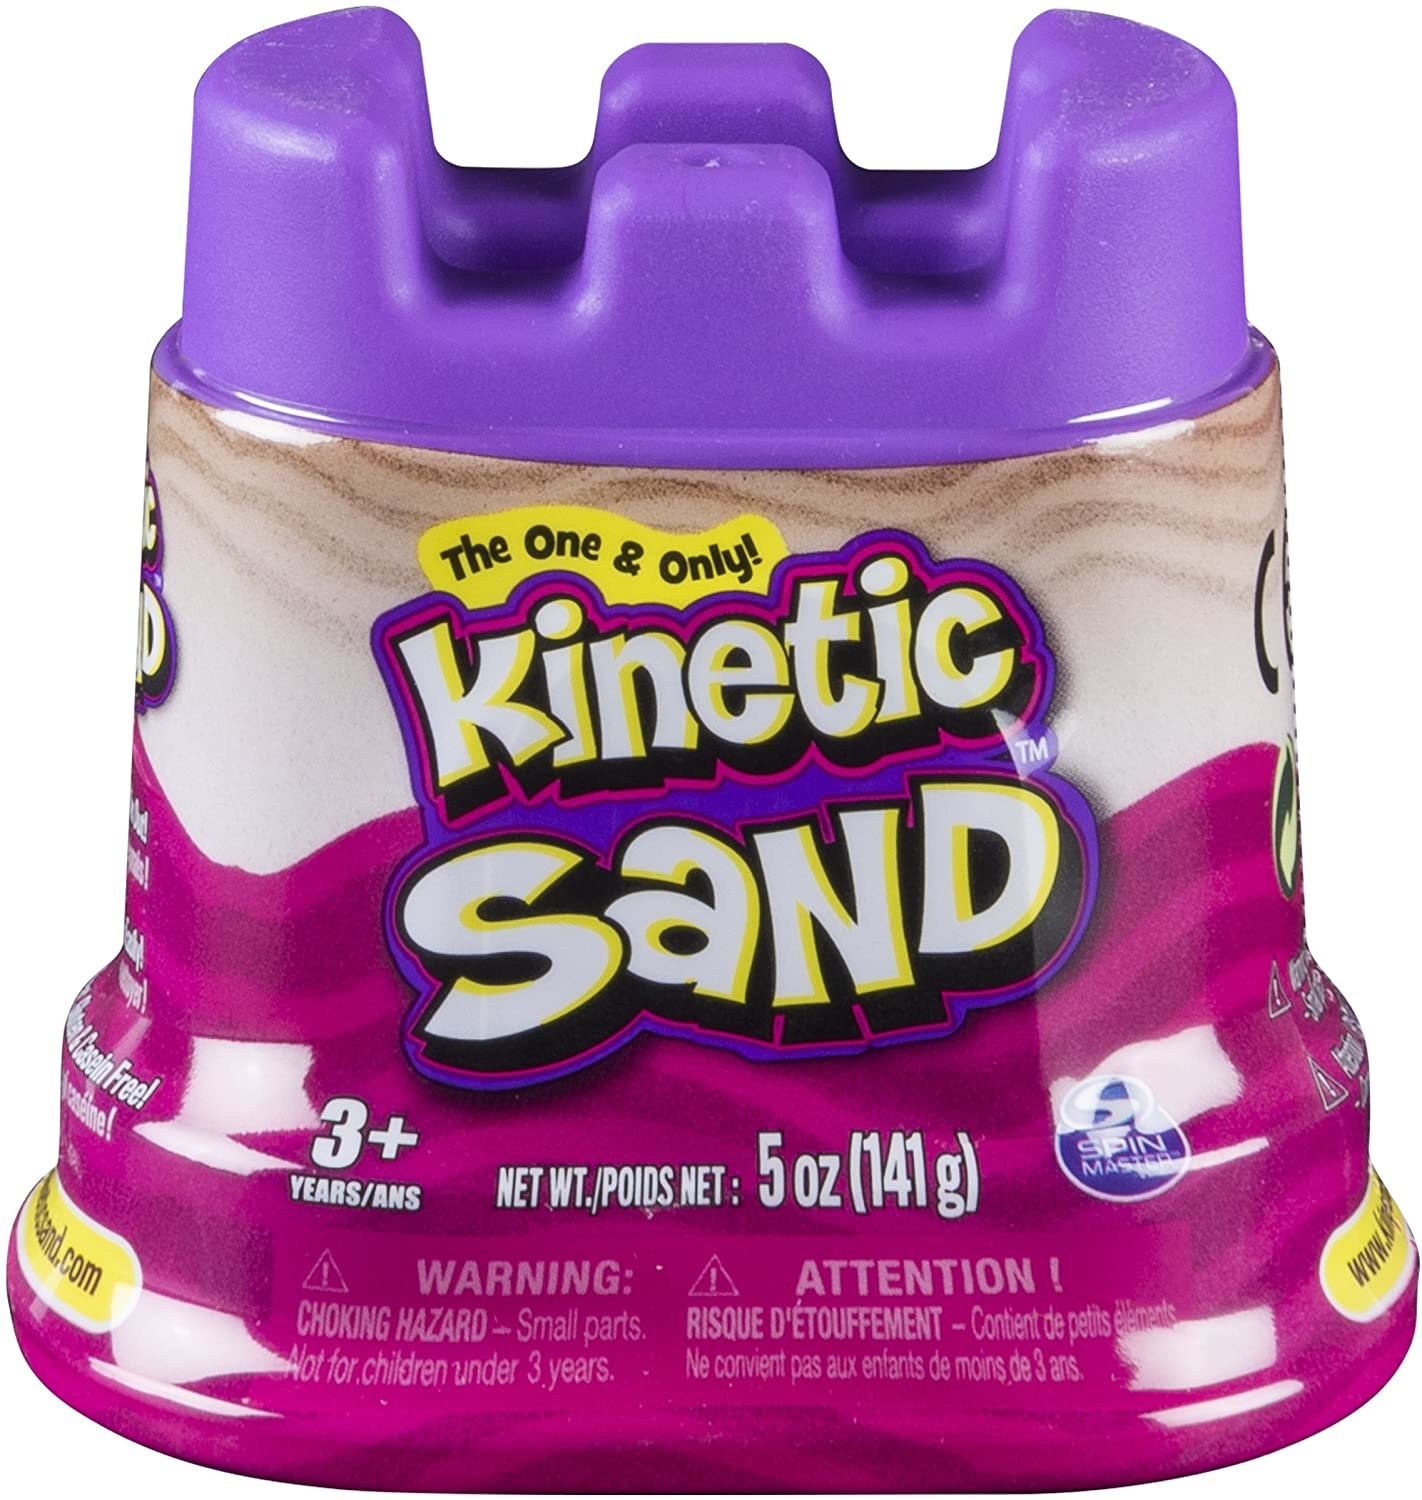  Kinetic Sand